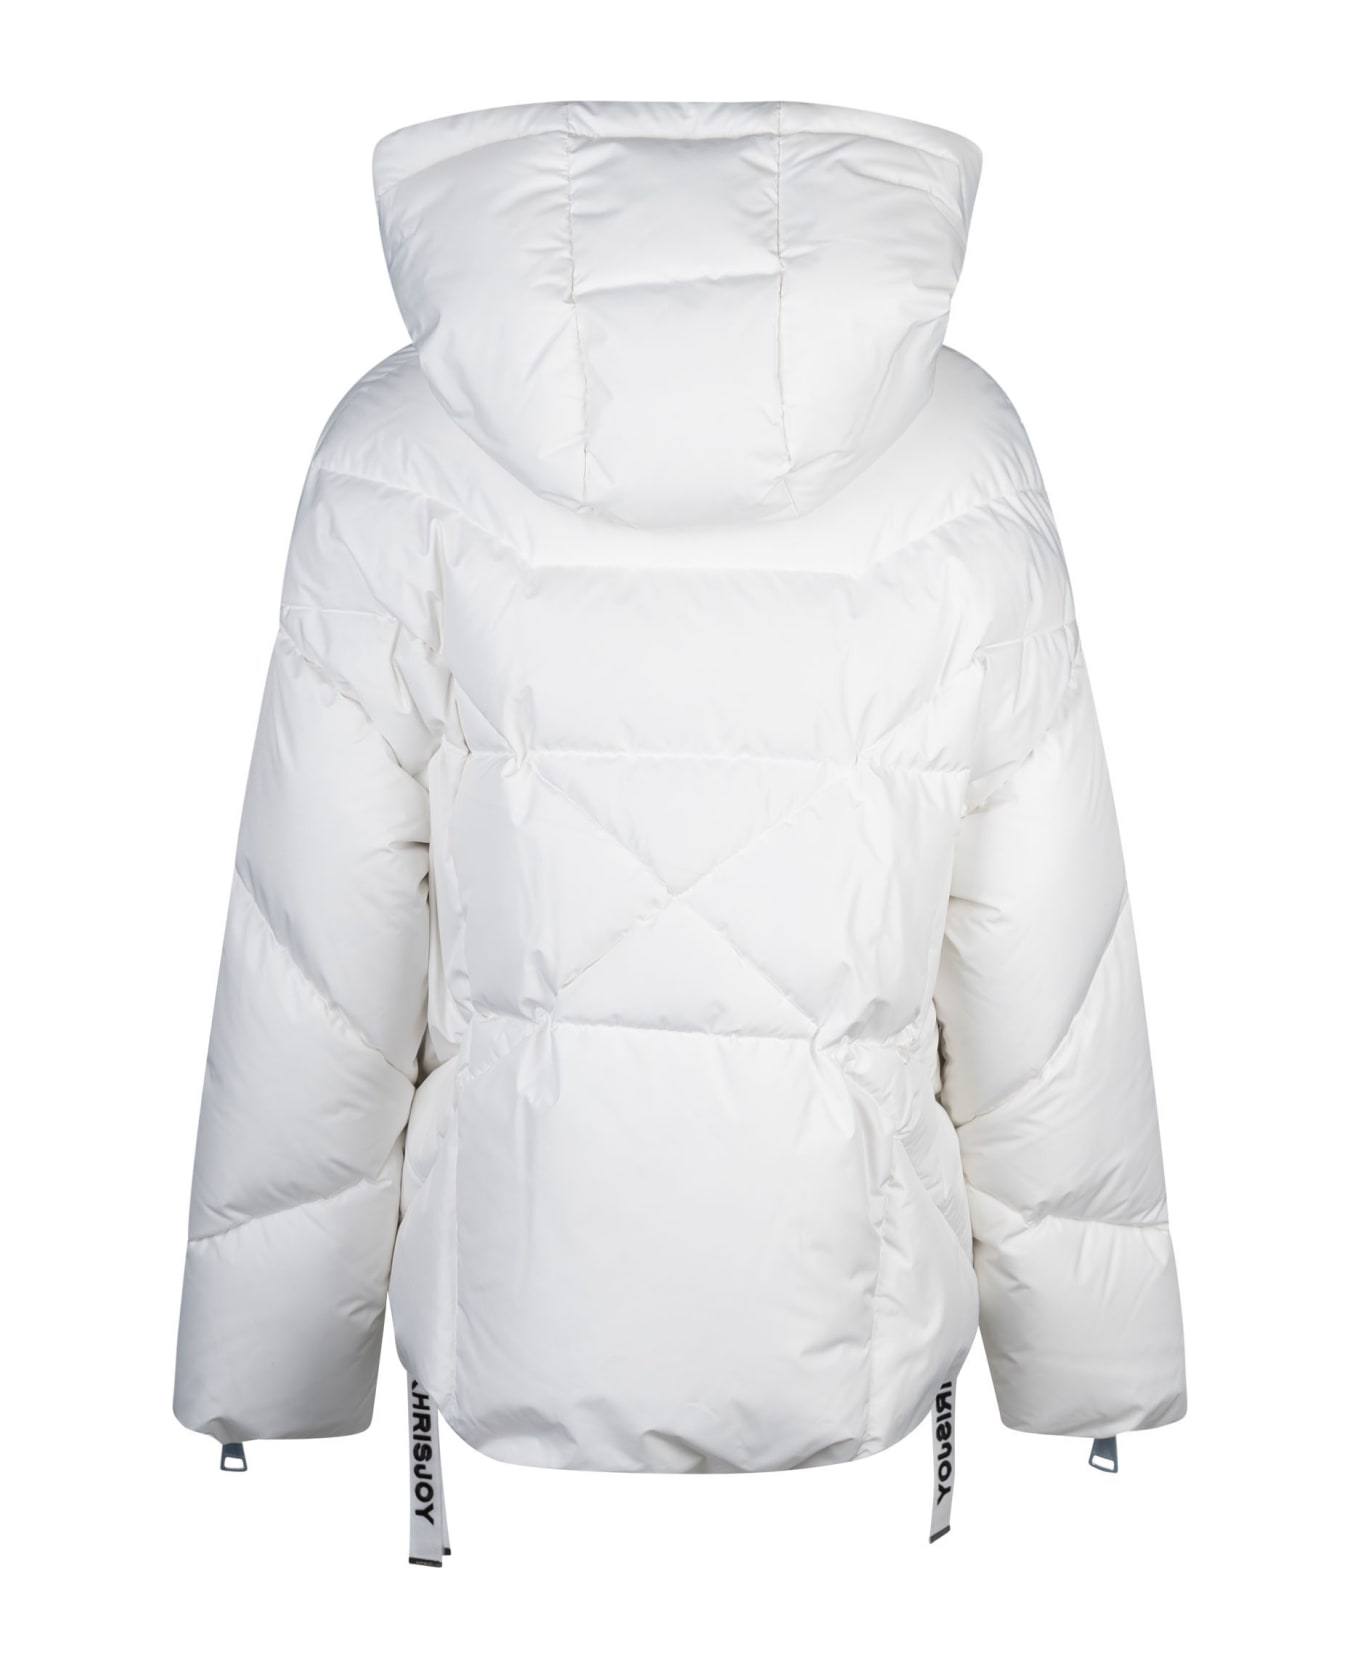 Khrisjoy Iconic Puffer Jacket - White ダウンジャケット